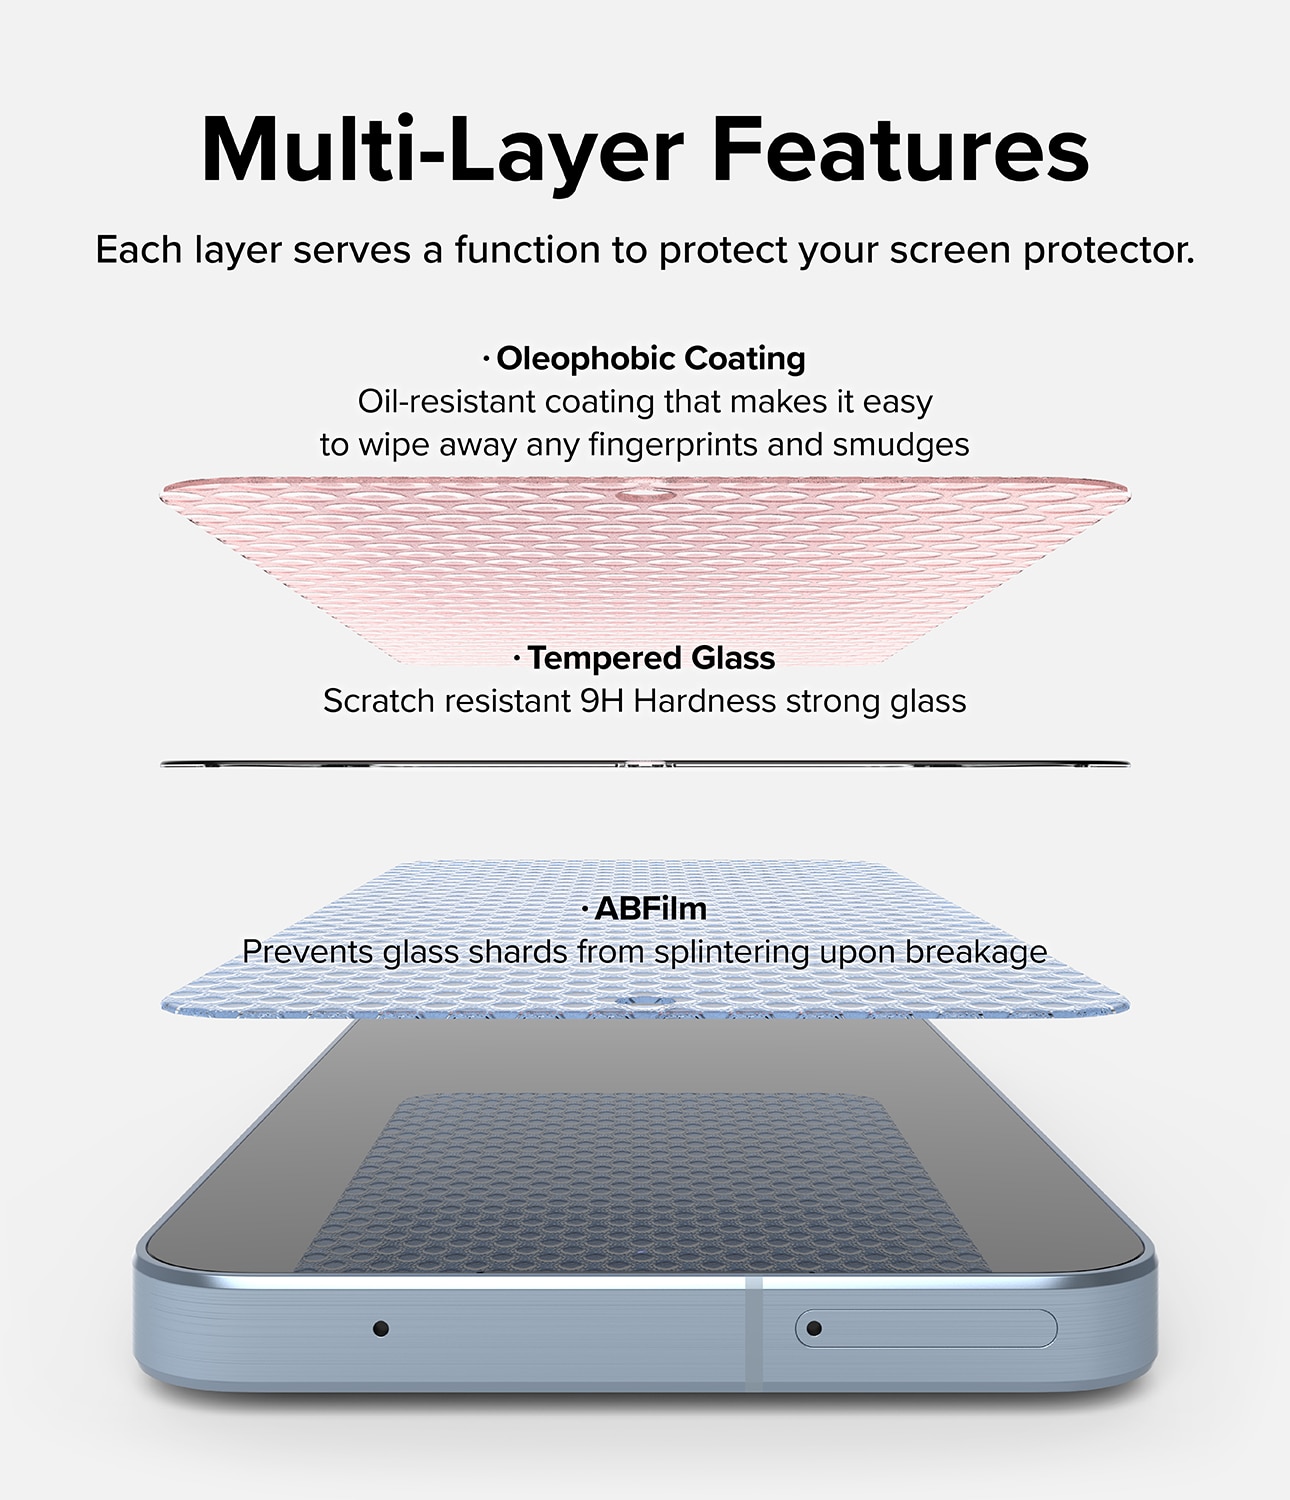 Samsung Galaxy A55 Easy Slide Glass (2-pack)